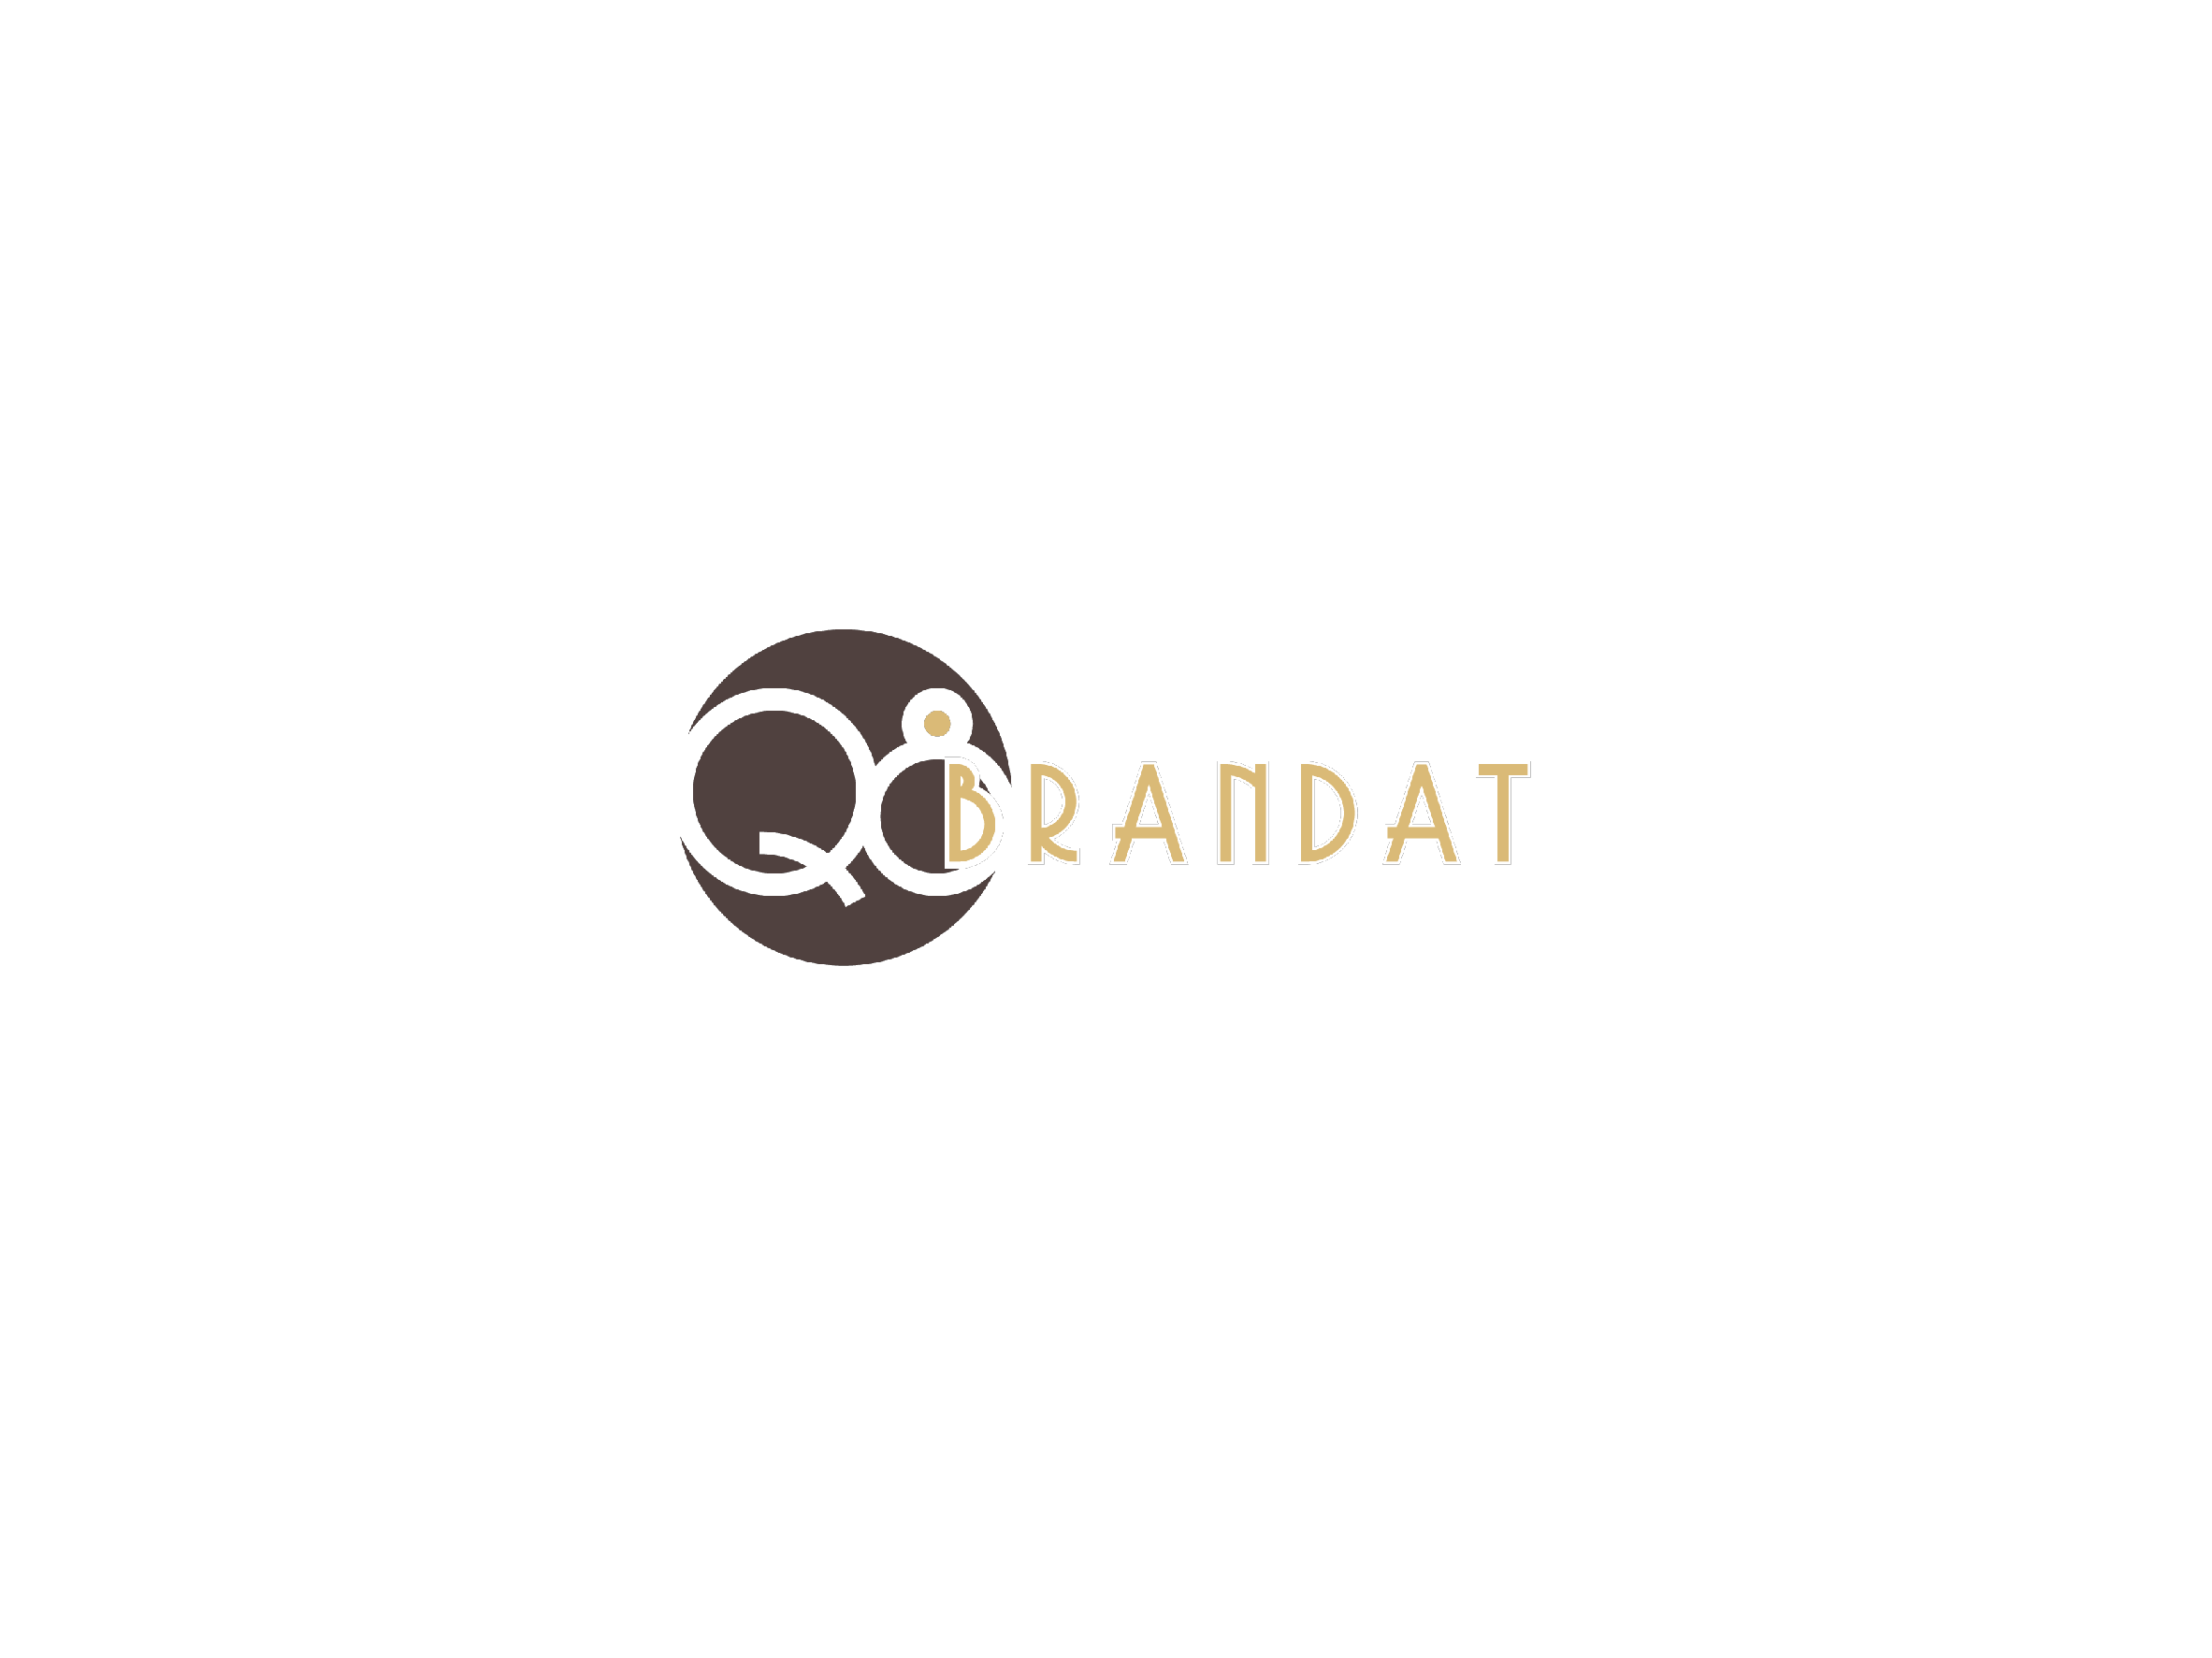 www.q8brandat.com